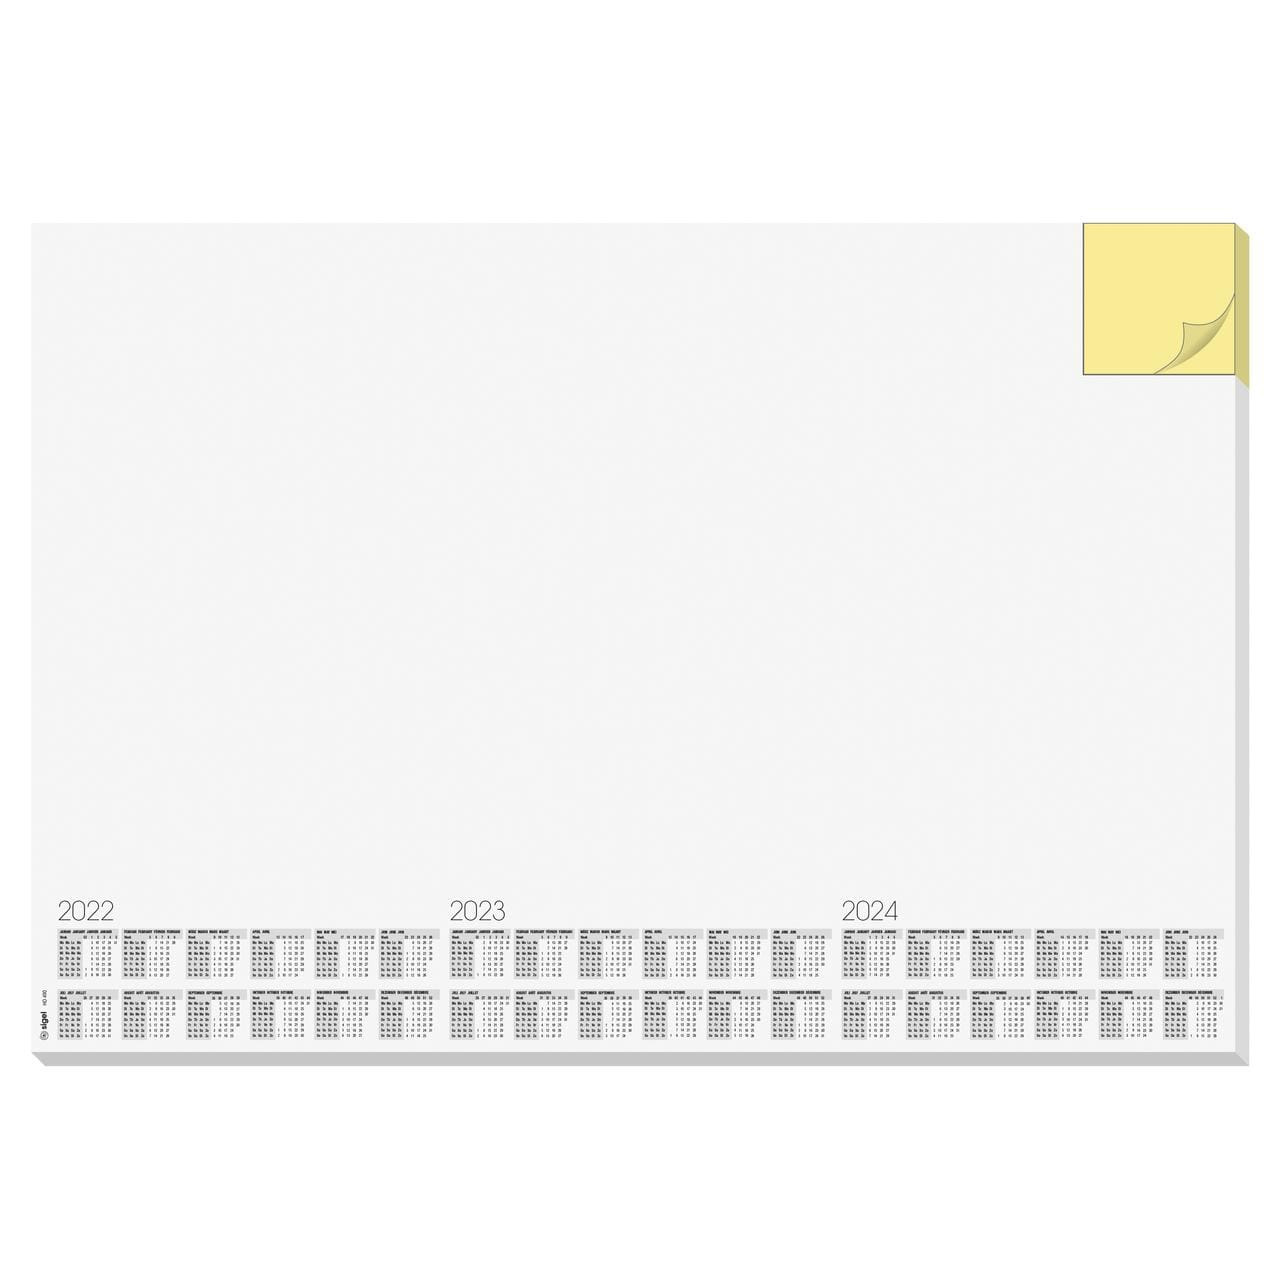 Bureau beschermer van papier 30 vellen 59.5 x 41 cm design memo white